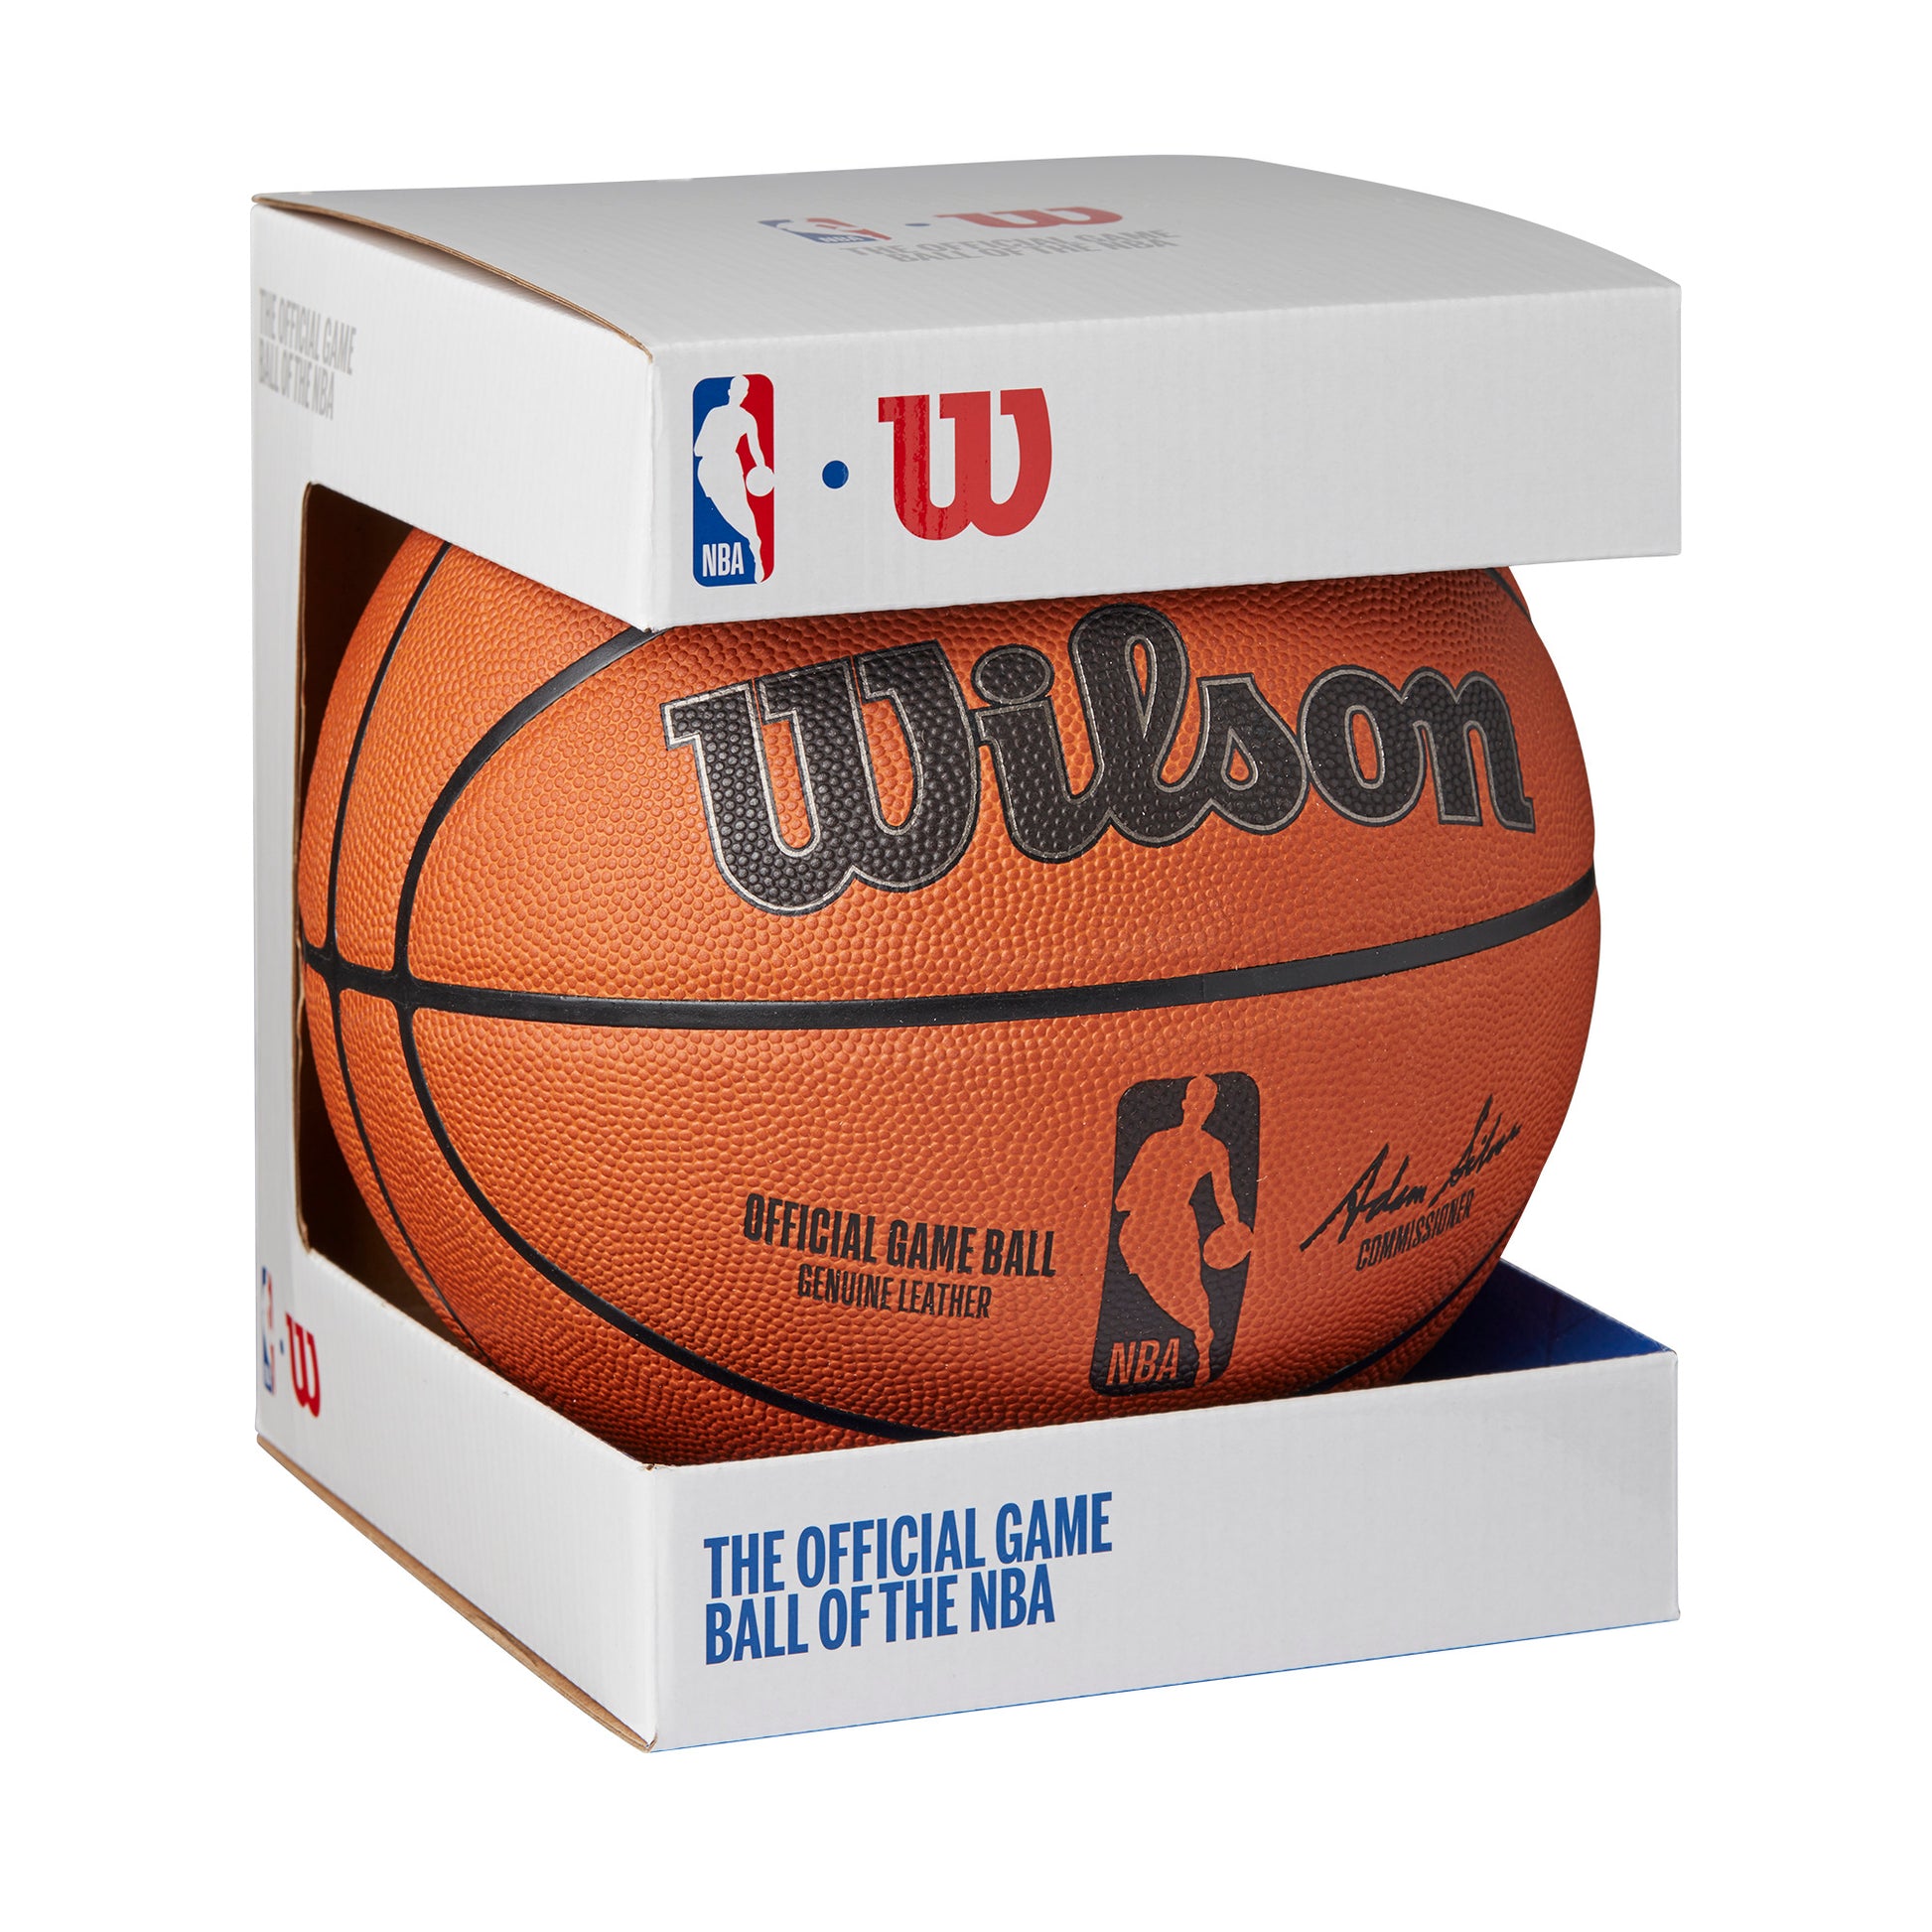 Wilson NBA OFFICIAL GAME BALL BASKETBALL RETAIL Brown WTB7500ID